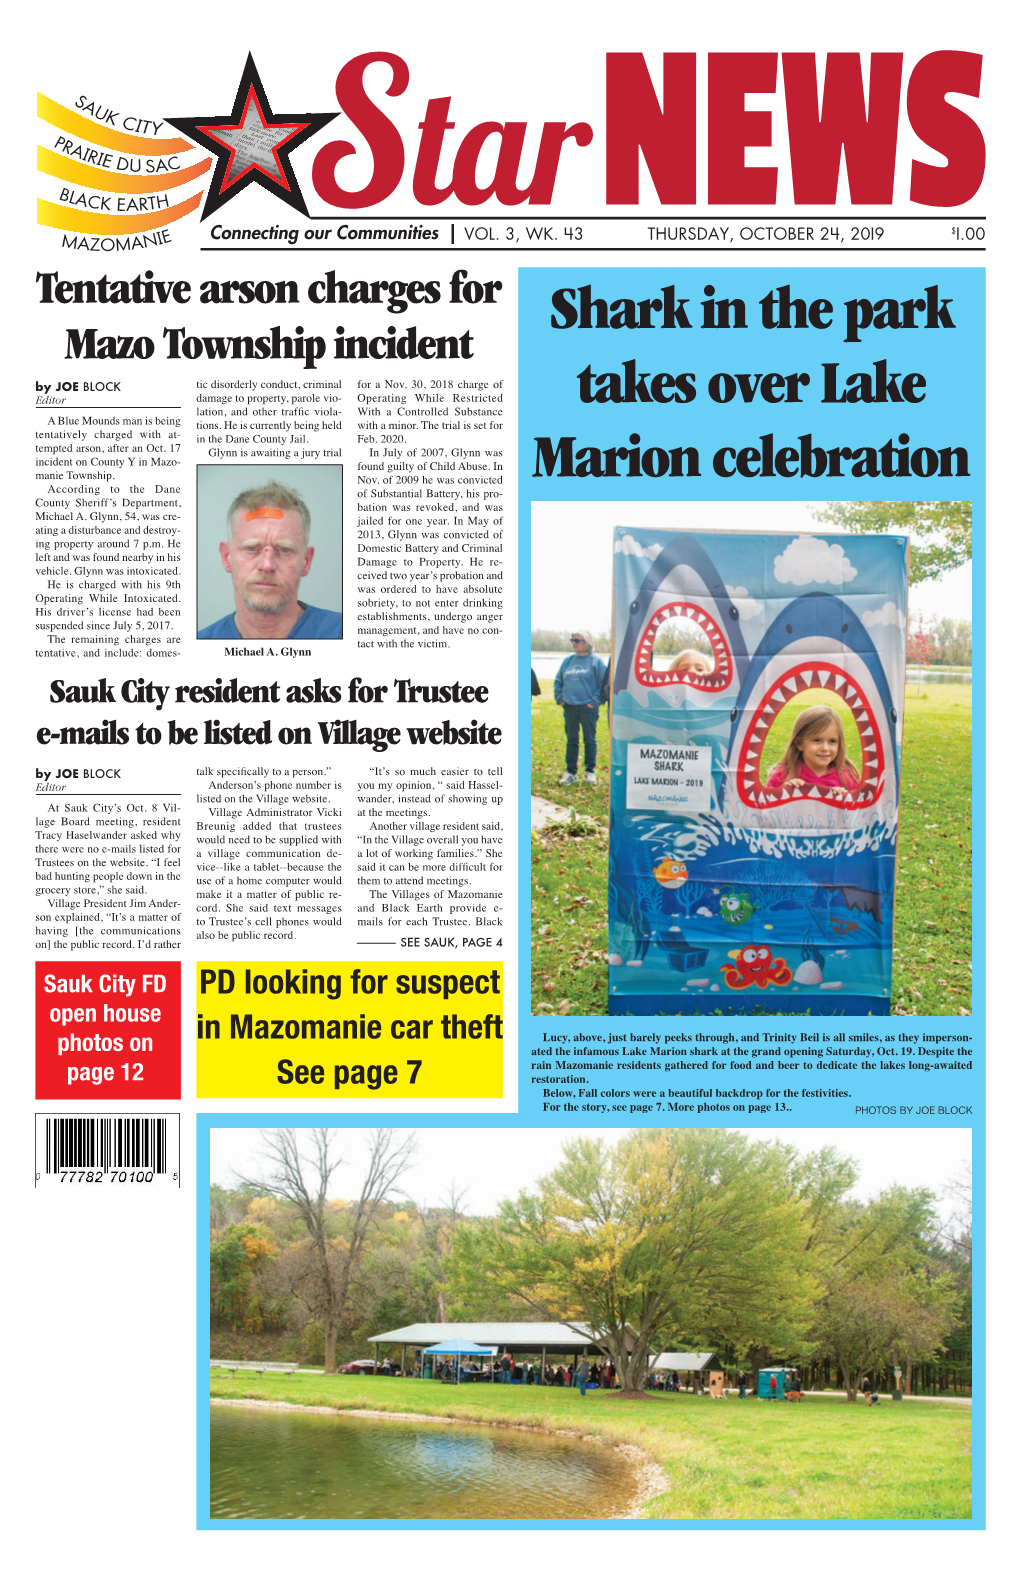 Shark in the Park Takes Over Lake Marion Celebration